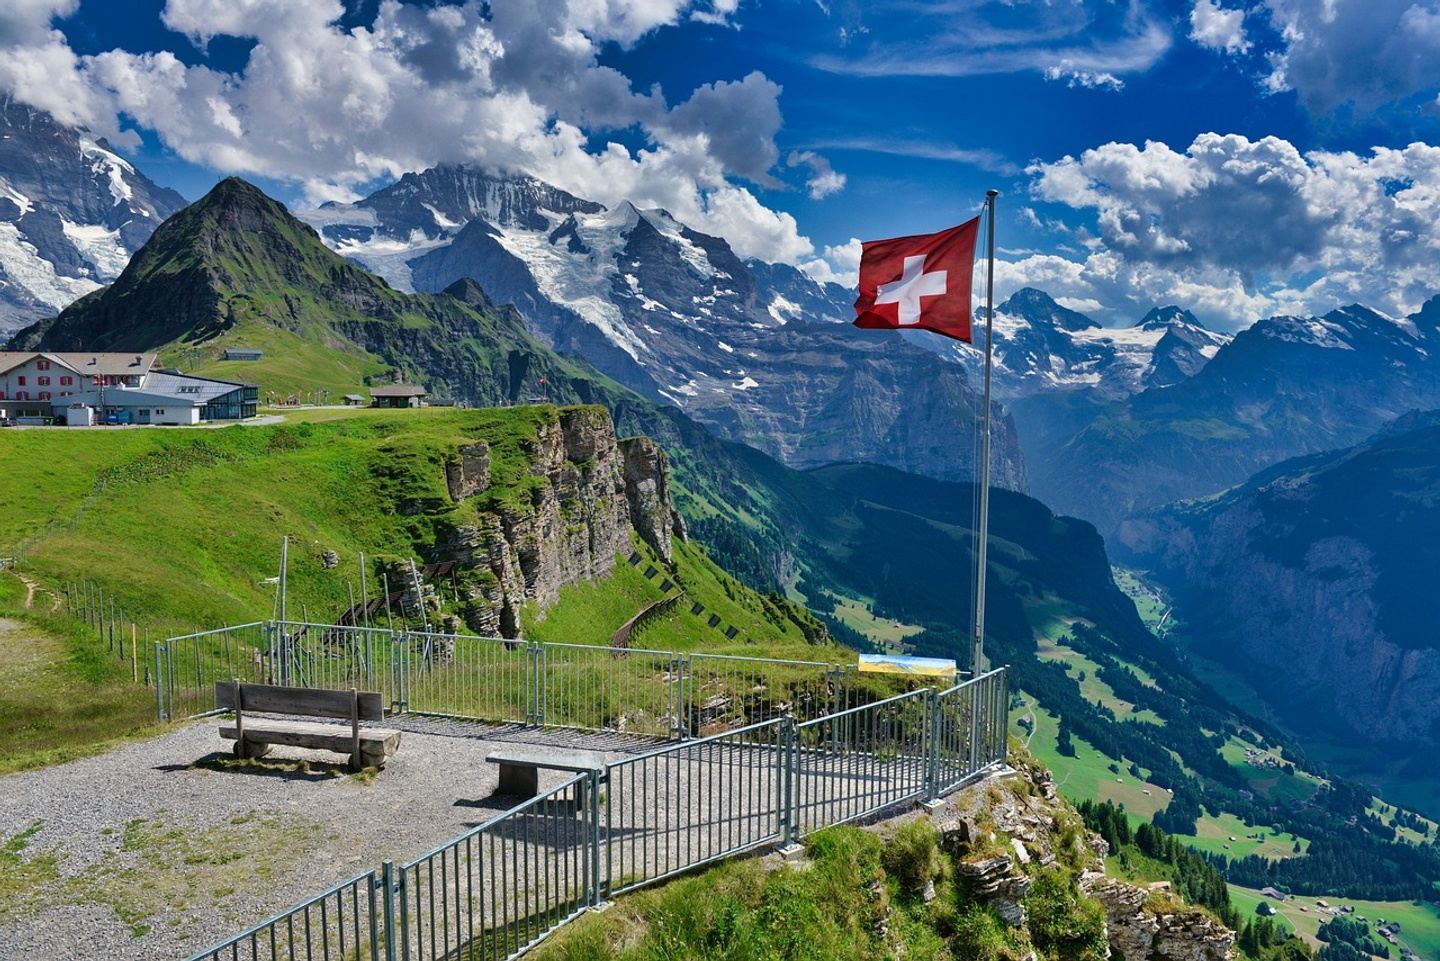 Switzerland’s Lakes, Mountains & Rails